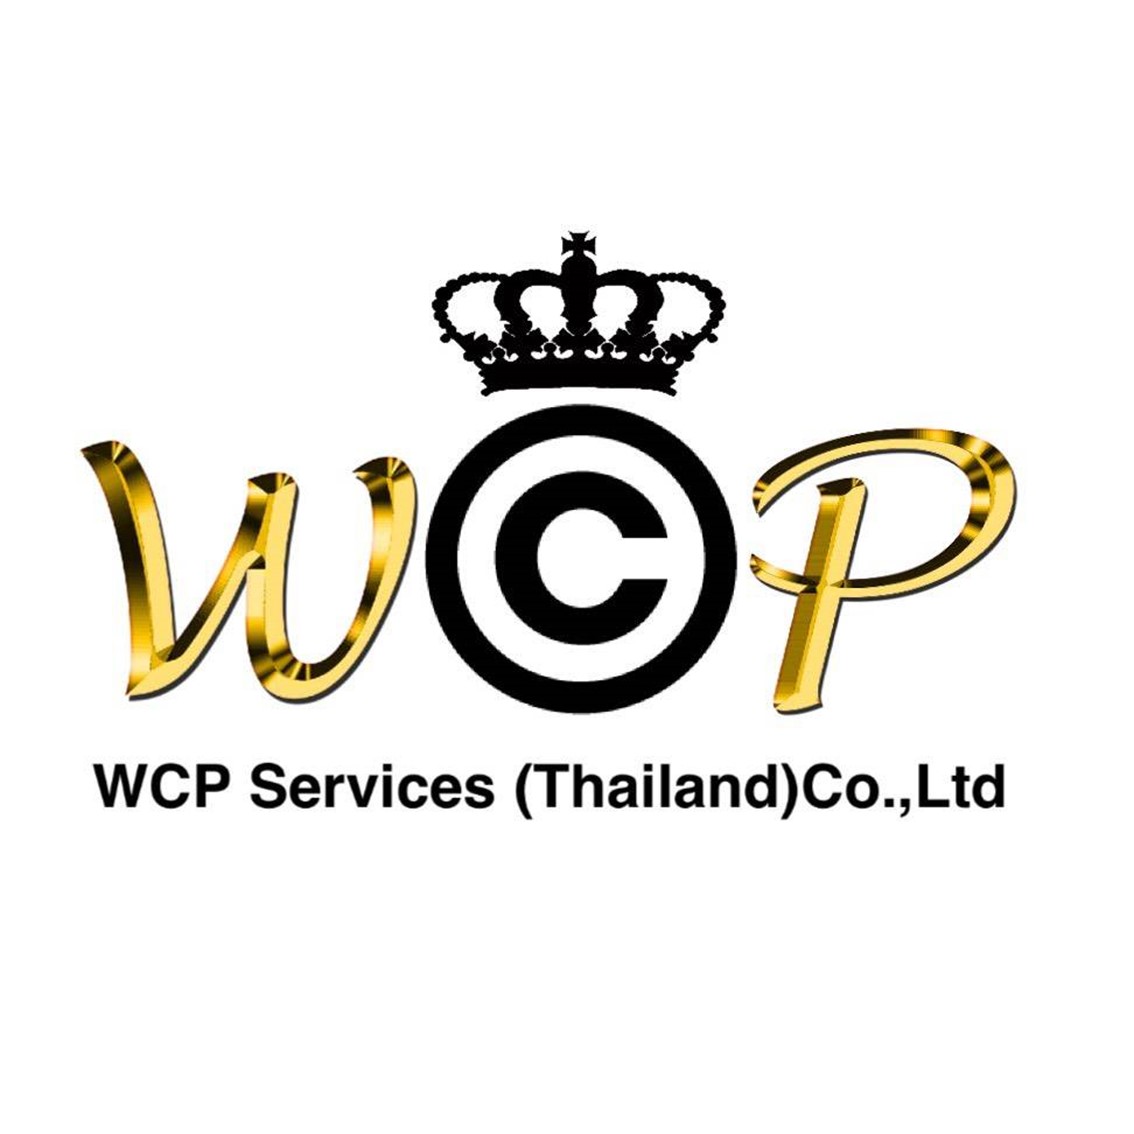 WCP Services (Thailand)